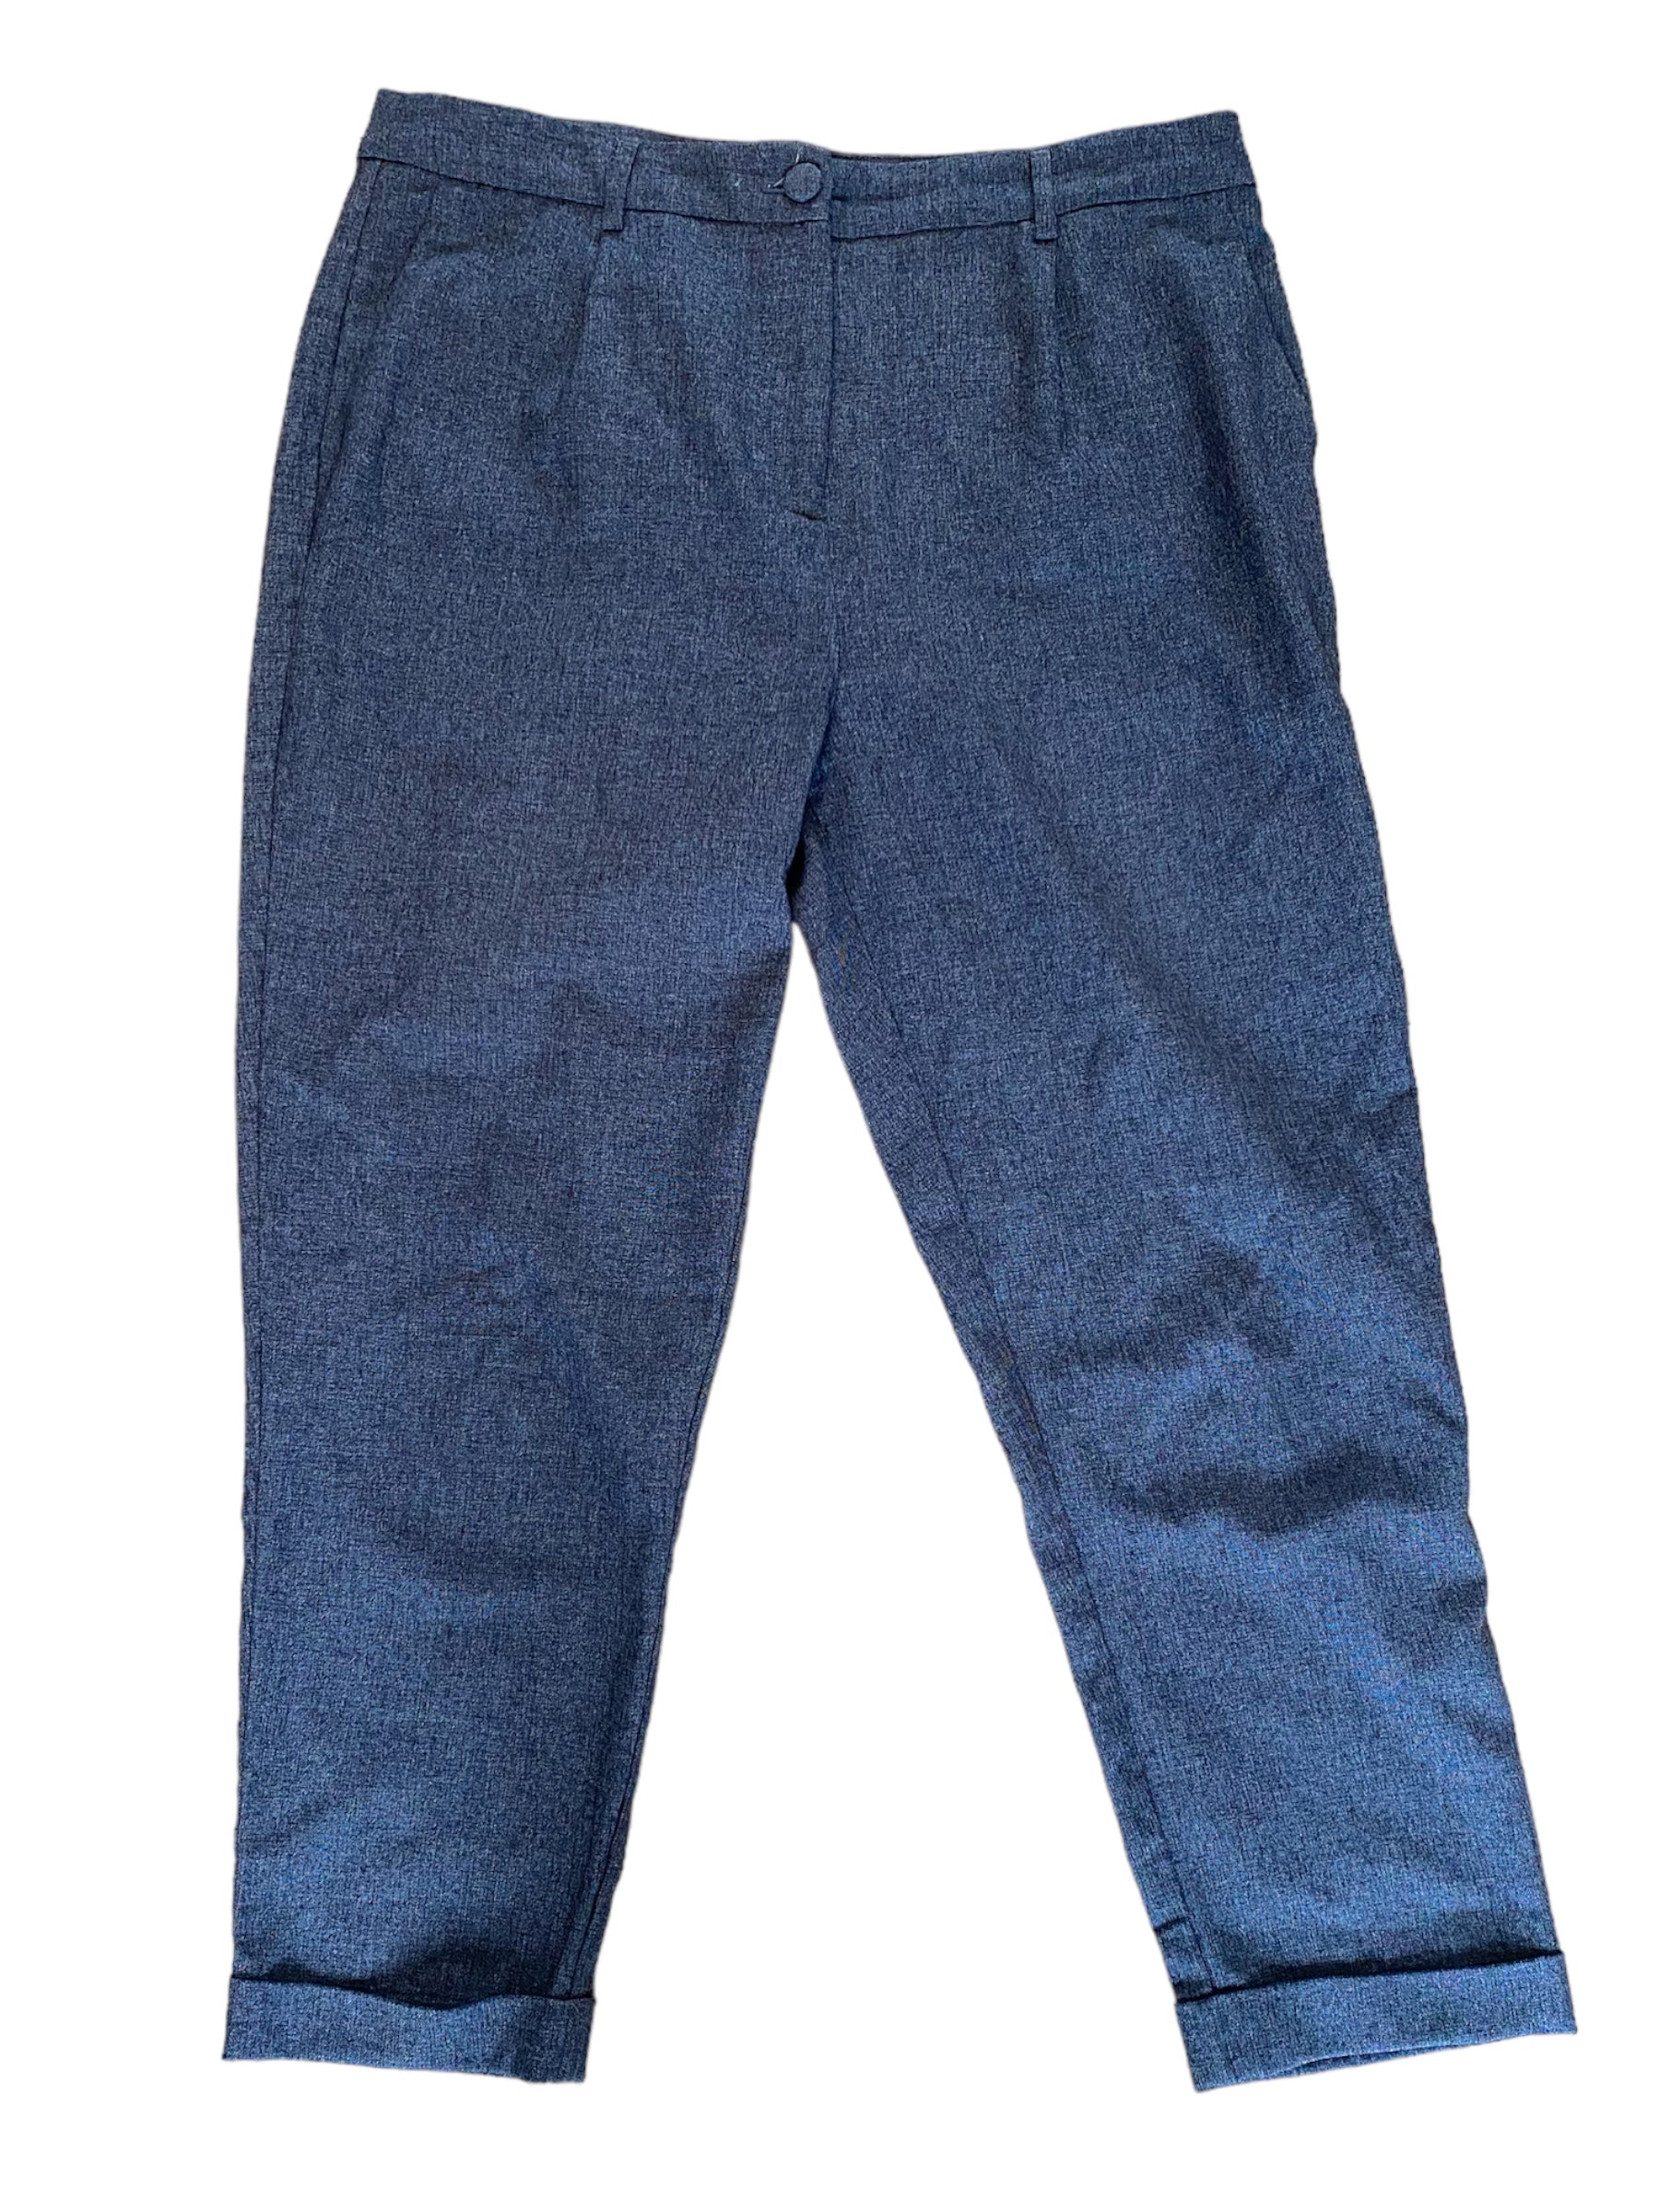 Max Grey Pant | Size 14